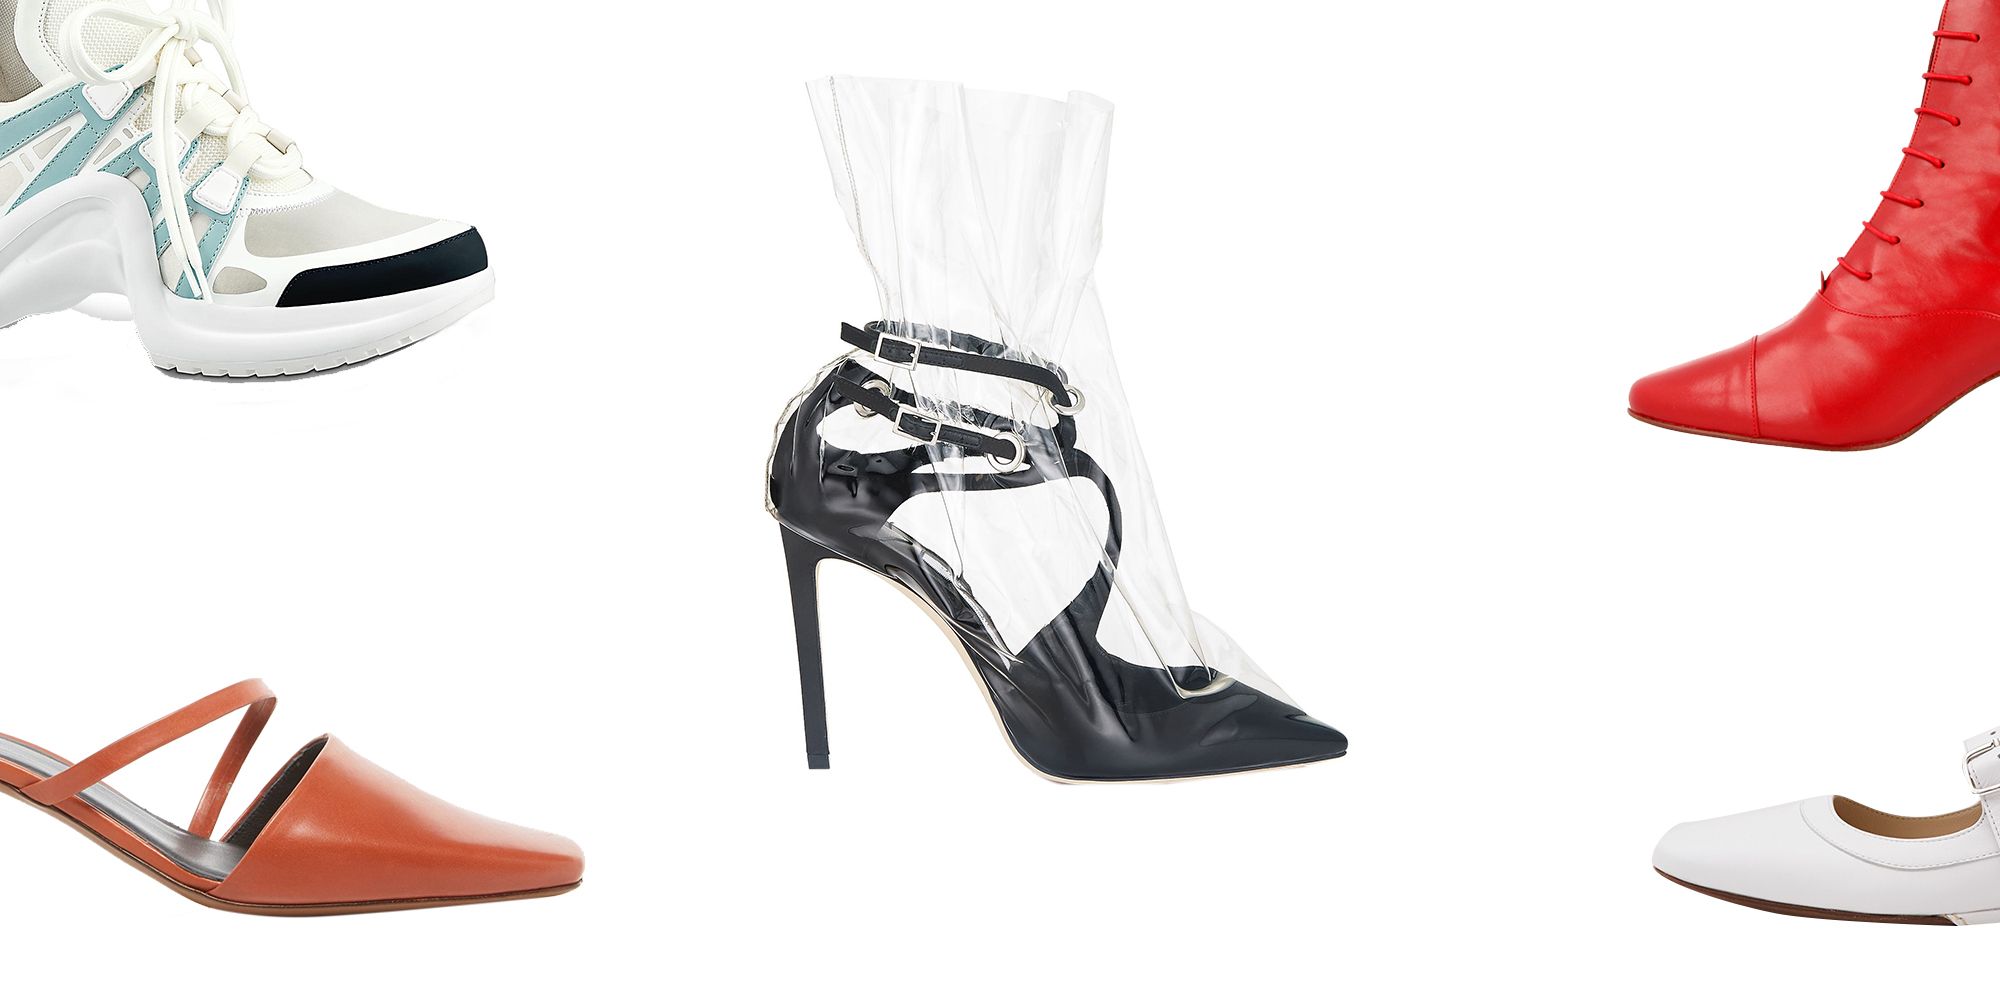 Steal vs Splurge: H Style Sandals